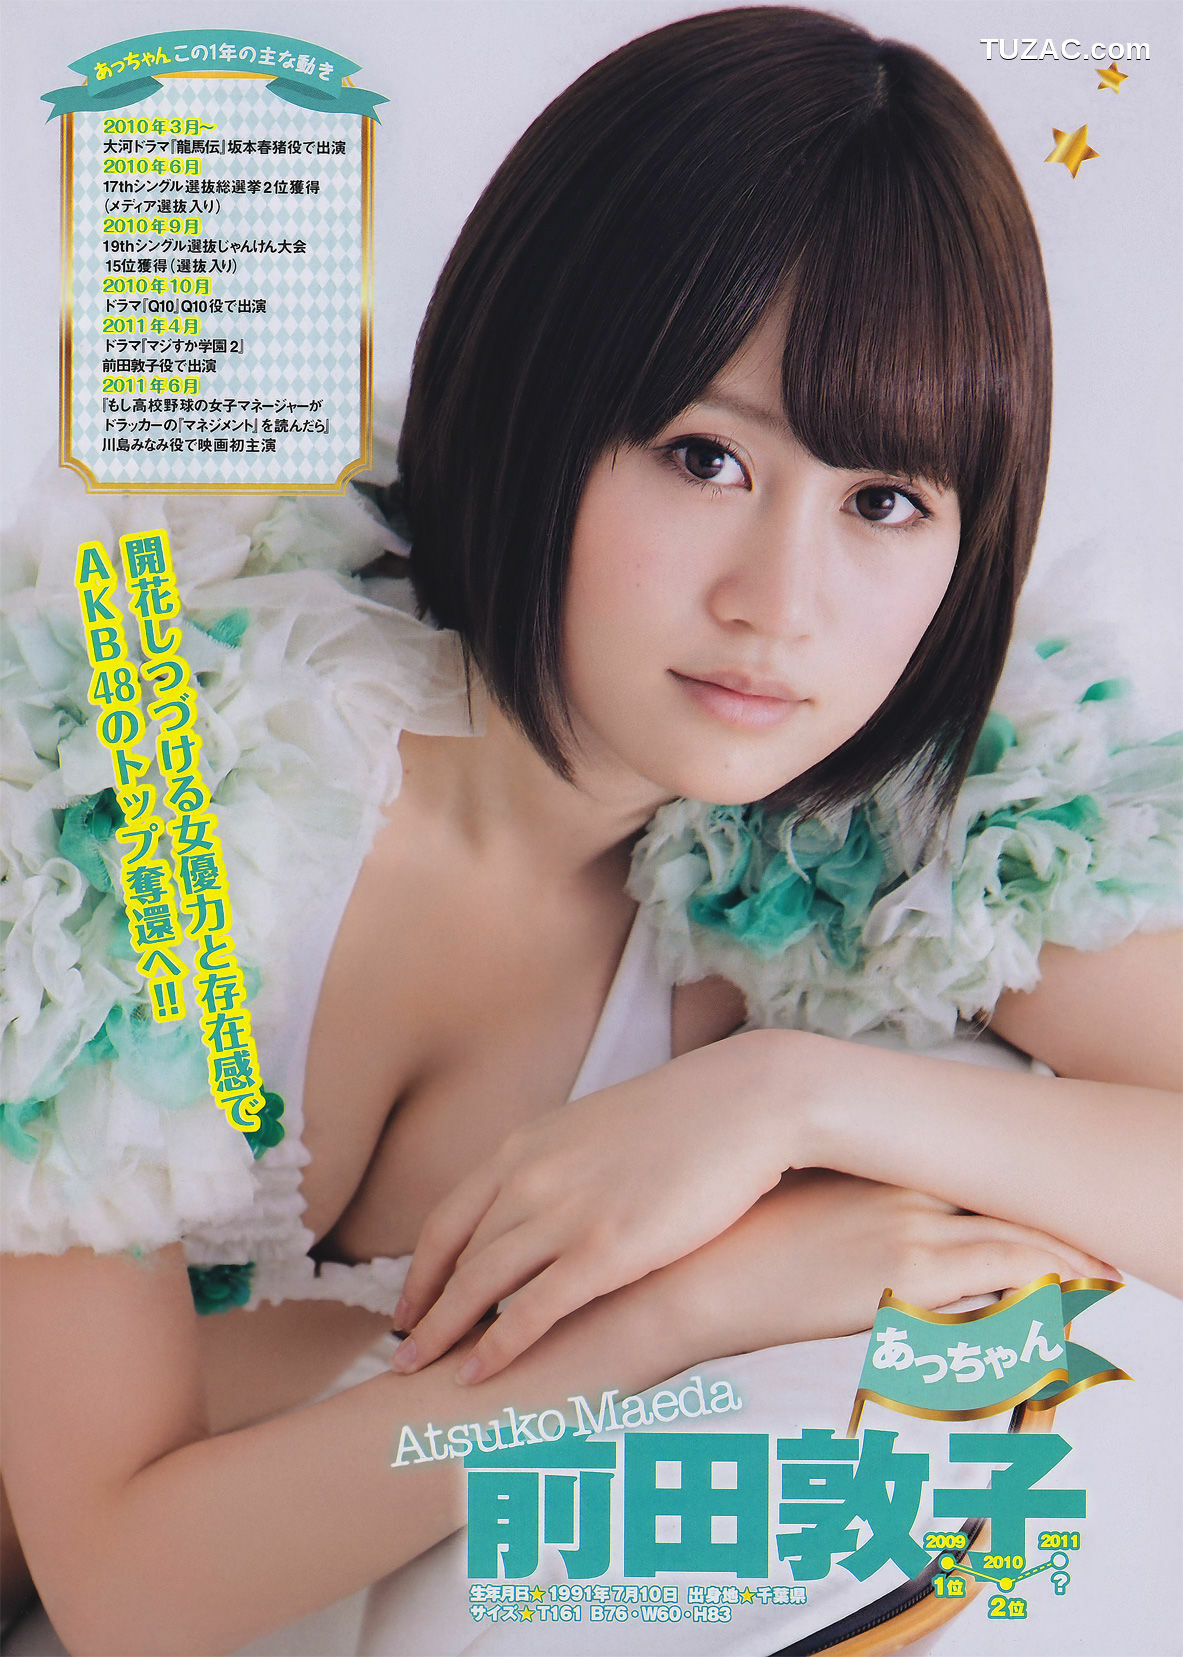 Young Magazine杂志写真_ AKB48 吉木りさ 松井絵里奈 2011年No.26 写真杂志[15P]